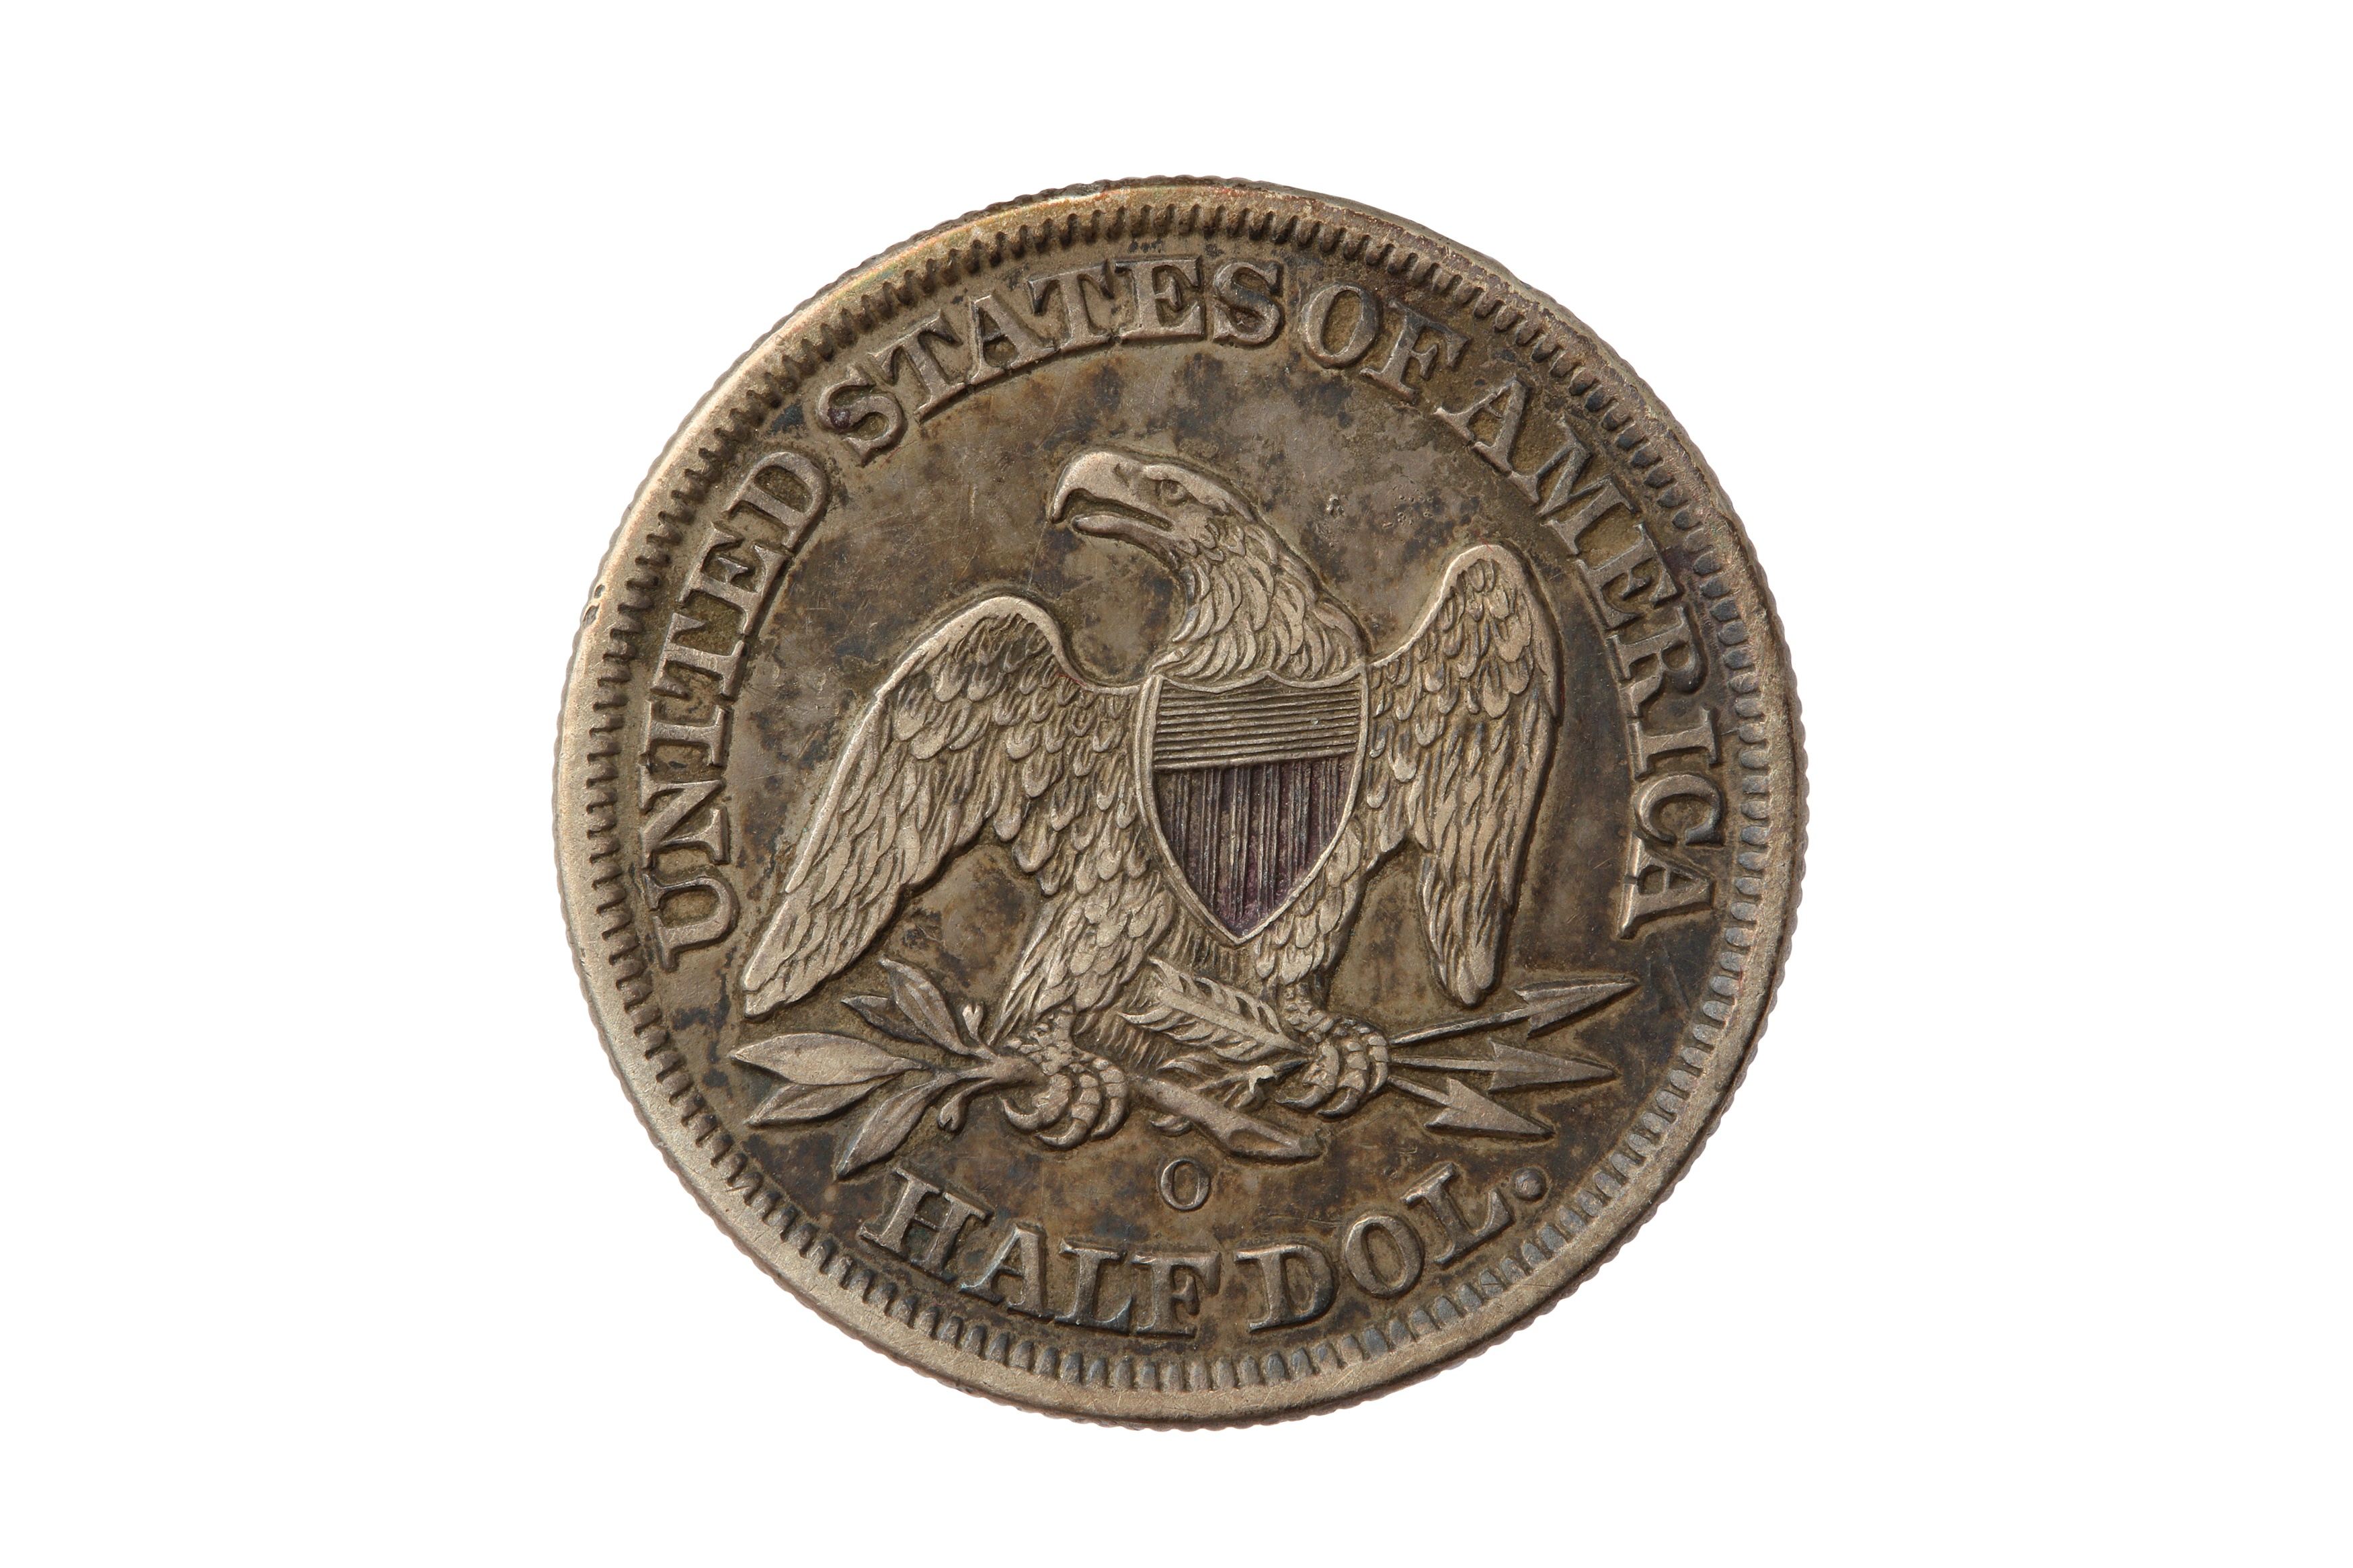 USA, 1854-O 50 CENTS/HALF DOLLAR. - Image 2 of 2